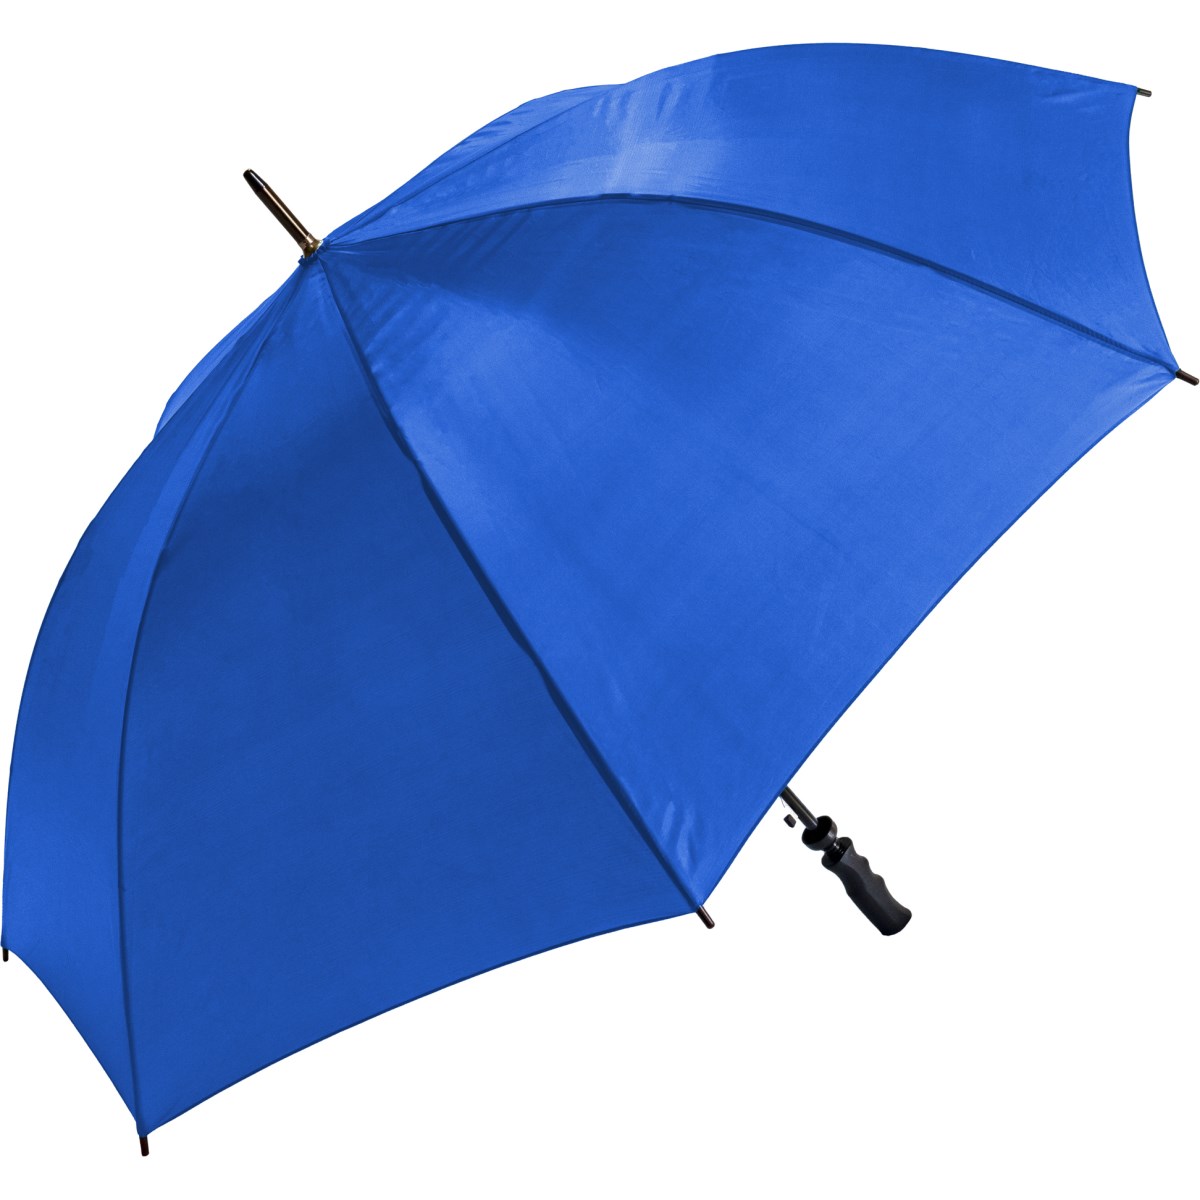 Fibrelight Large Royal Golf Umbrella (3473P)